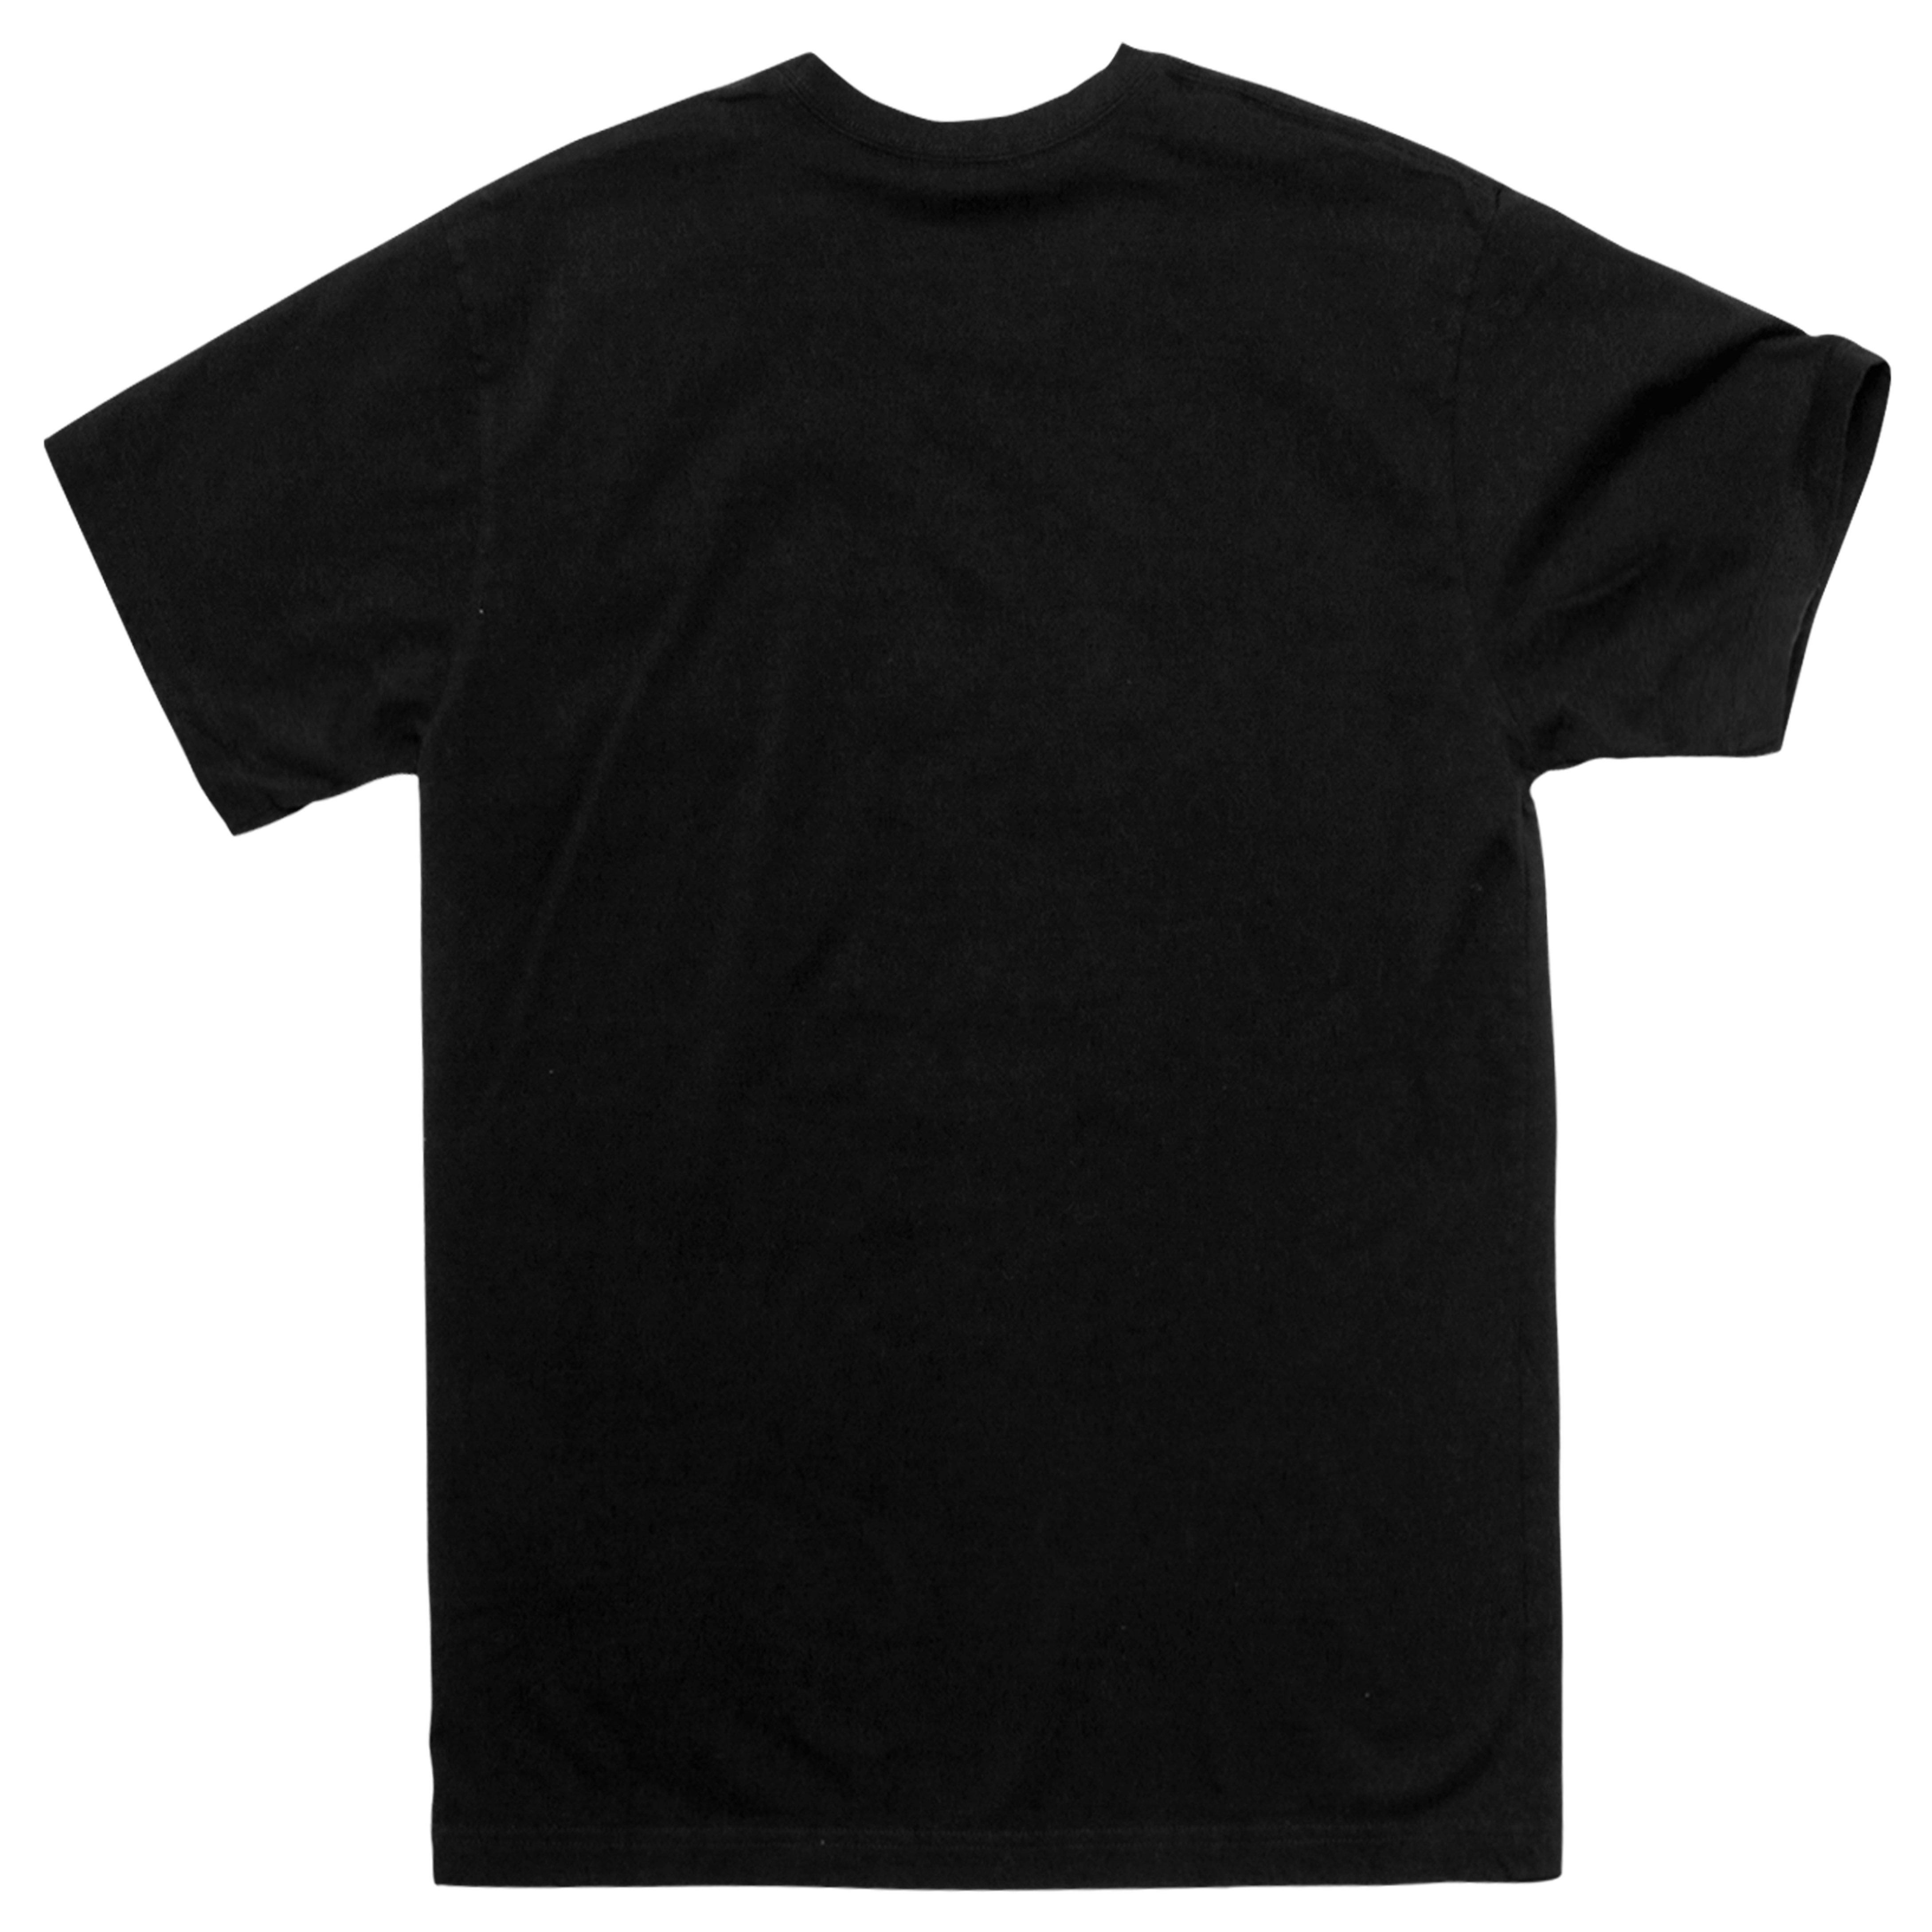 Neighborhood Front Id T-shirt in Black for Men - Lyst